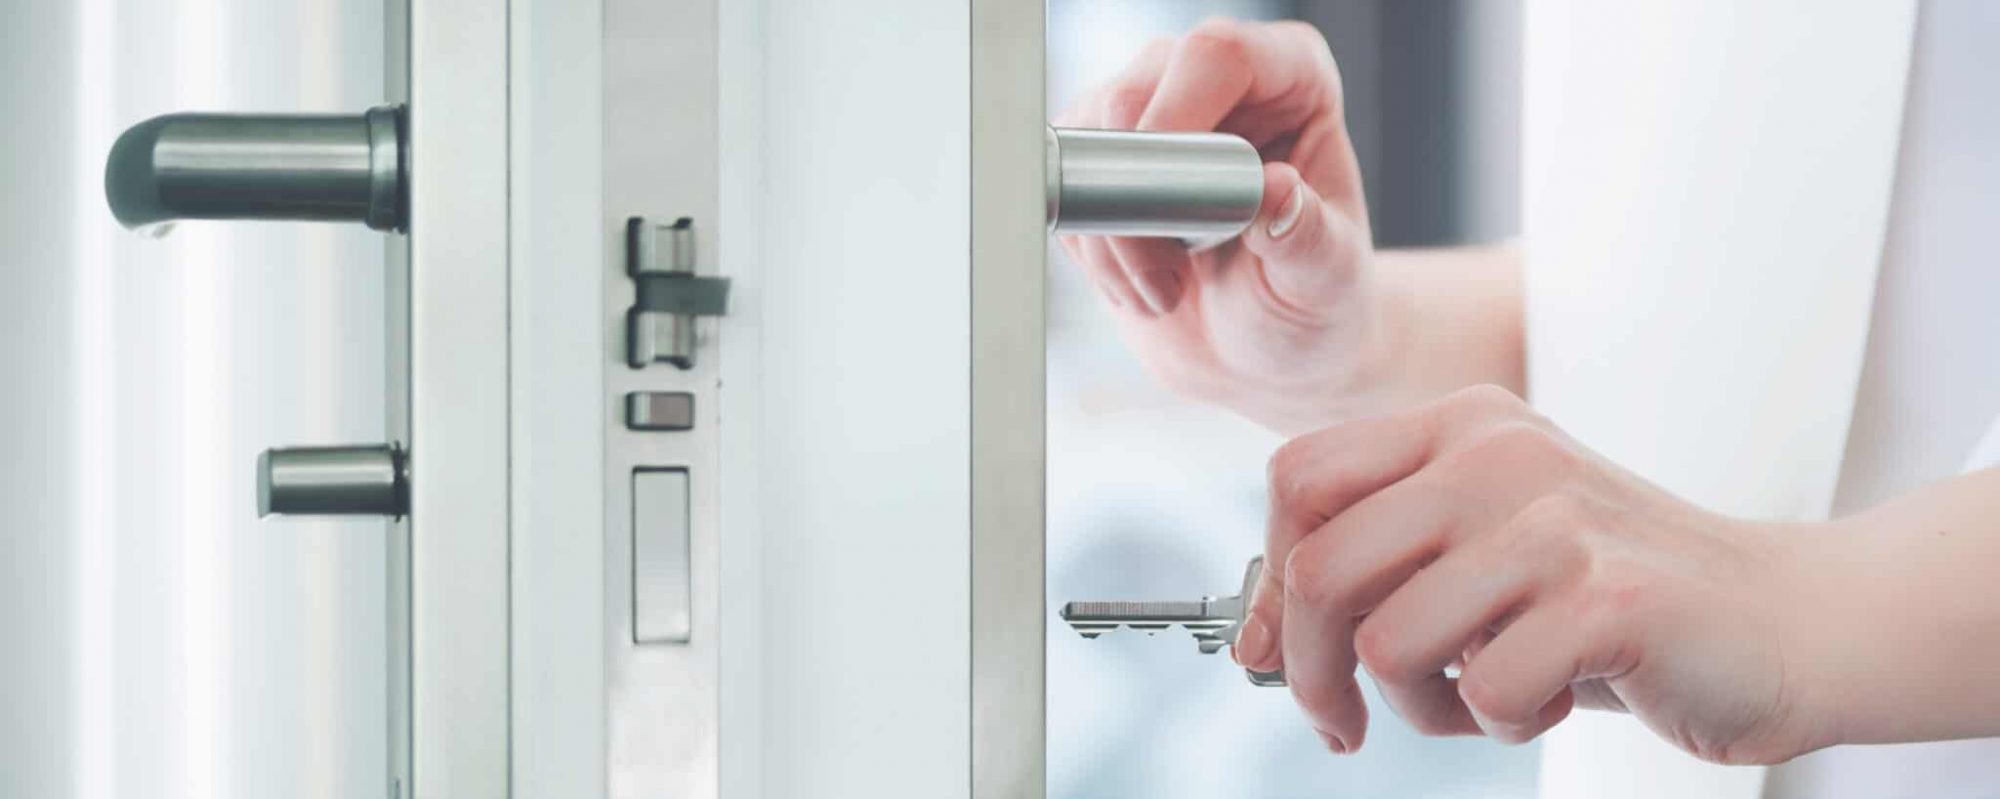 Locking or unlocking modern door with key in hand